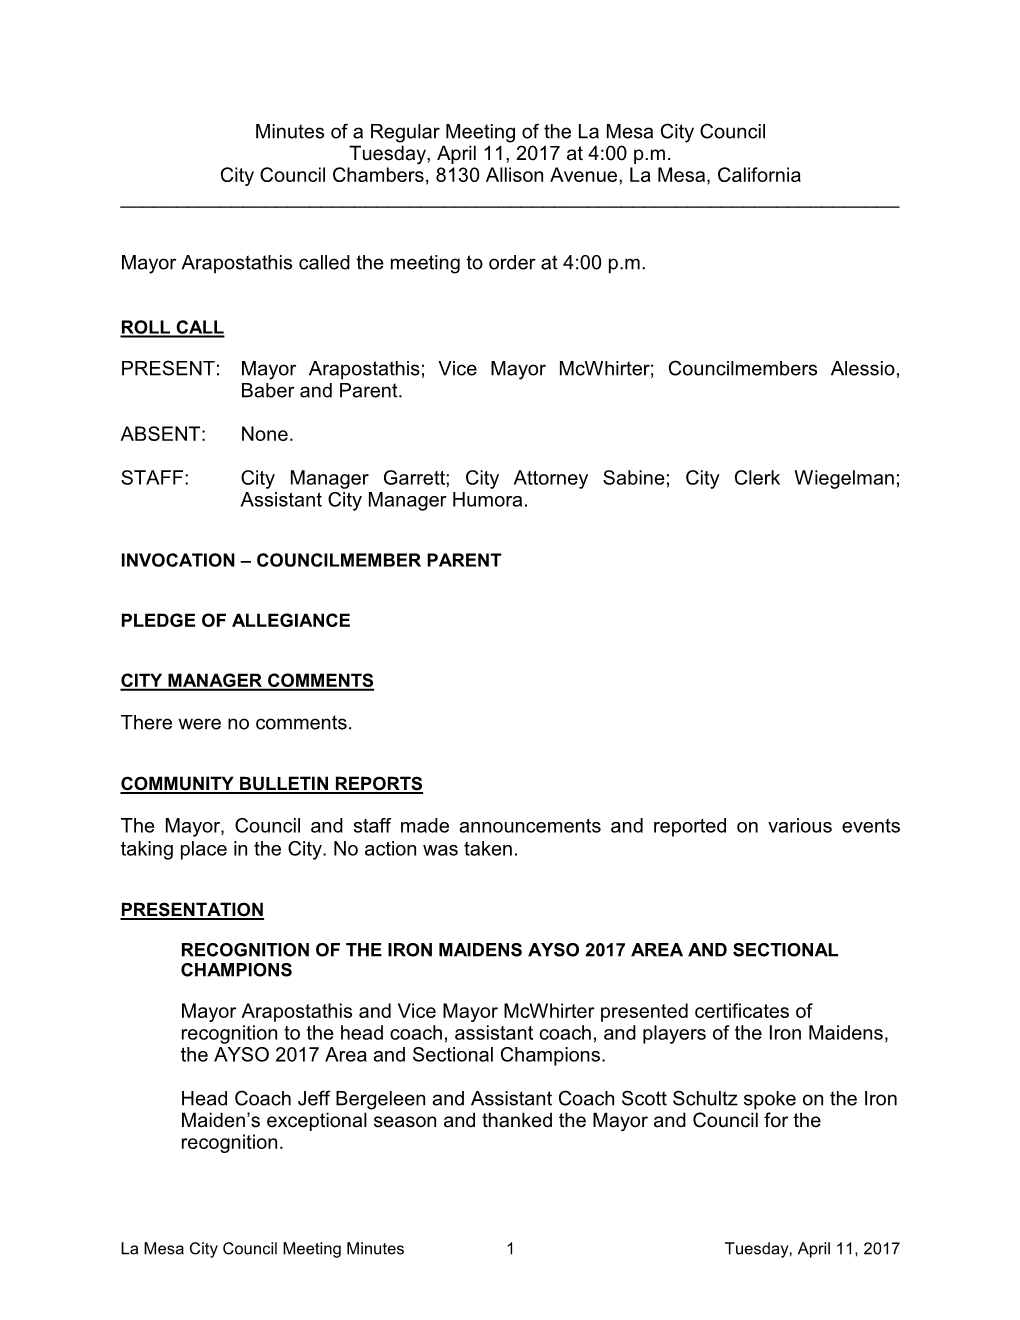 Minutes of a Regular Meeting of the La Mesa City Council Tuesday, April 11, 2017 at 4:00 P.M